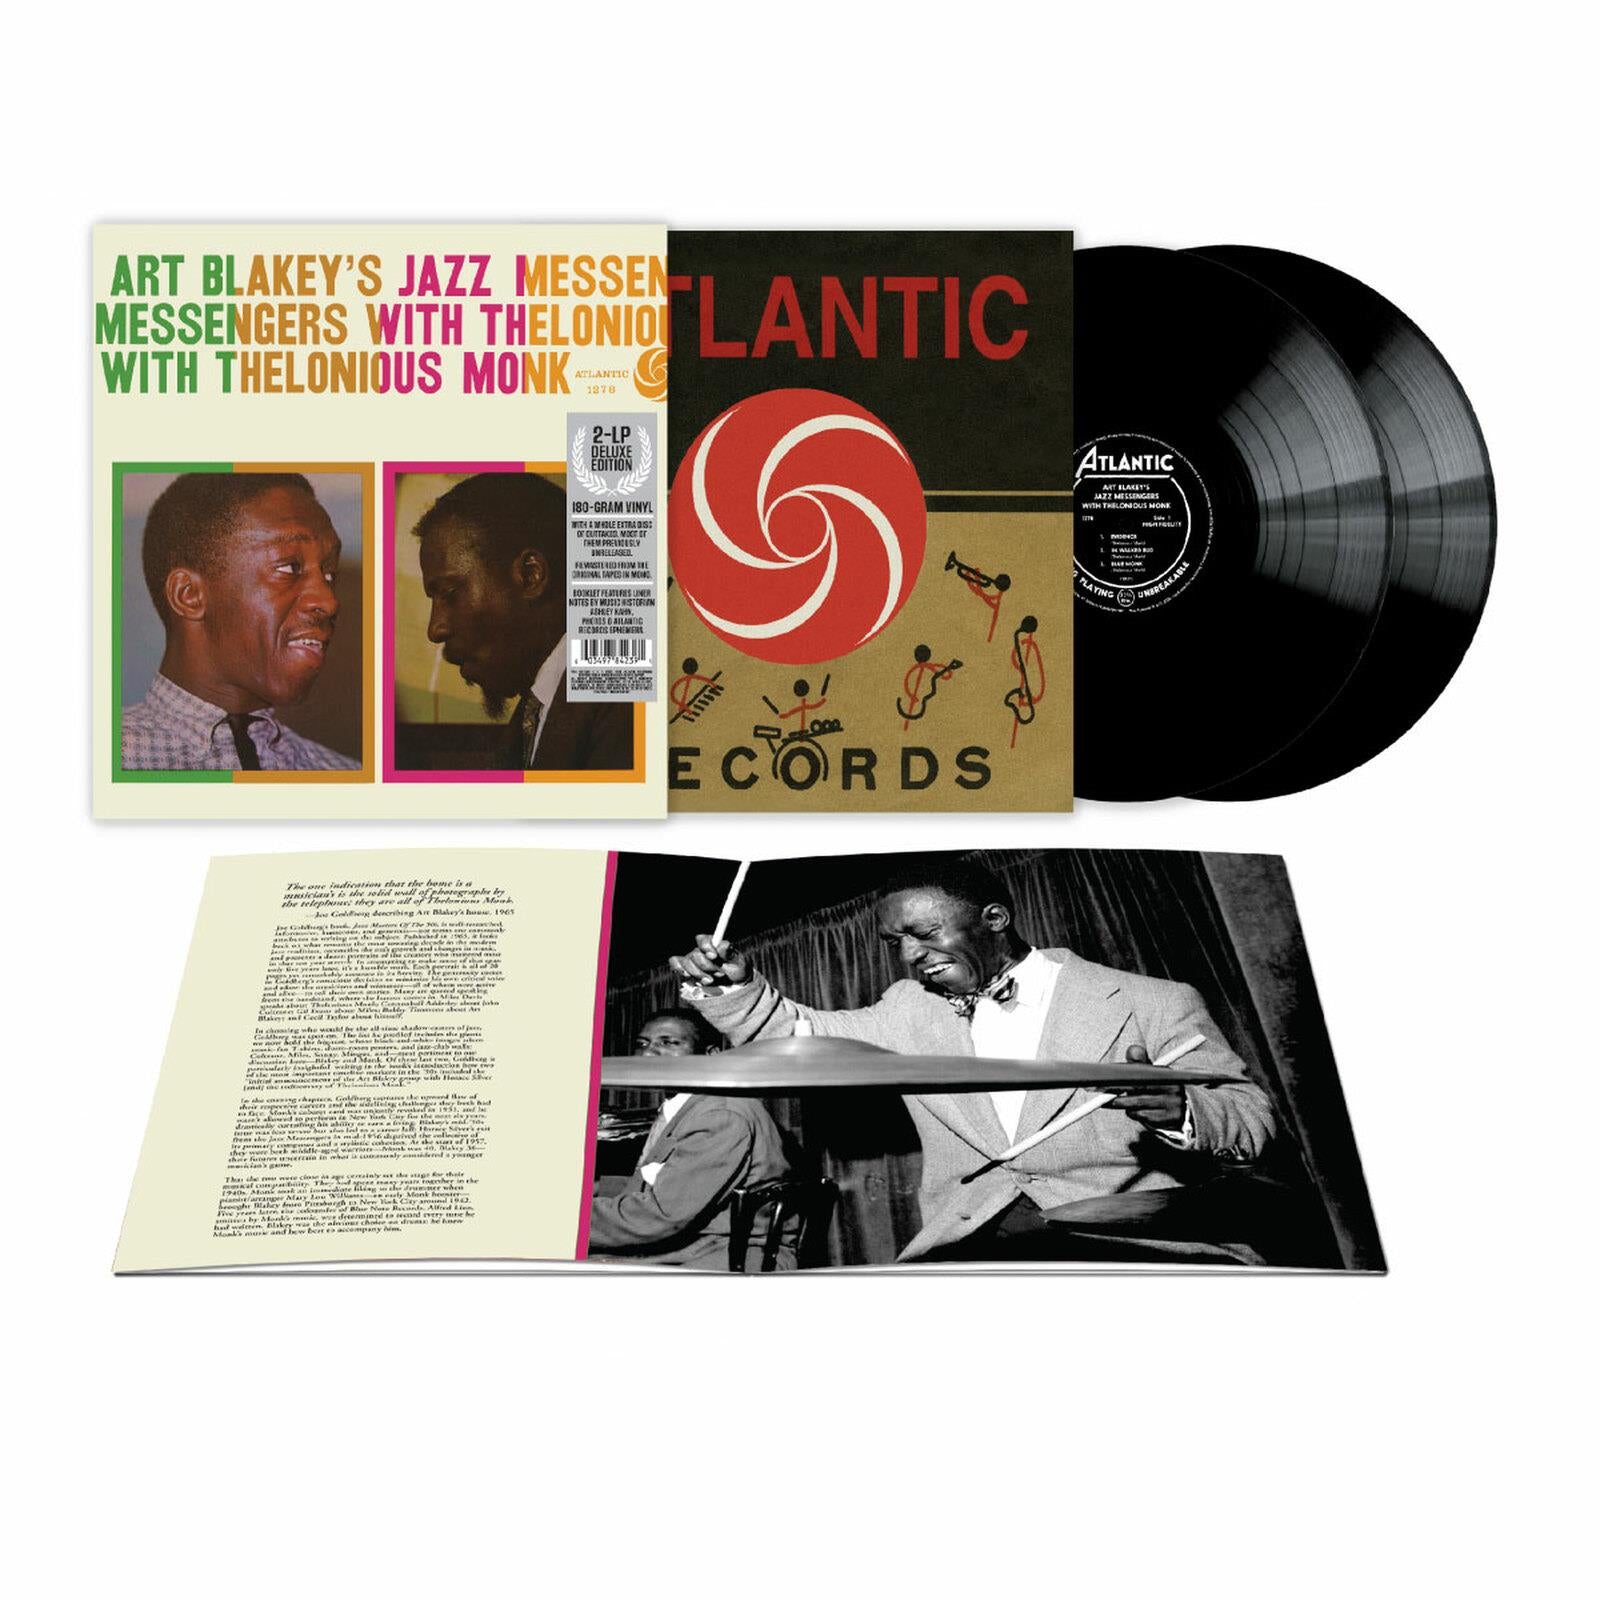 art blakey's jazz messengers with thelonious monk (vinyl)